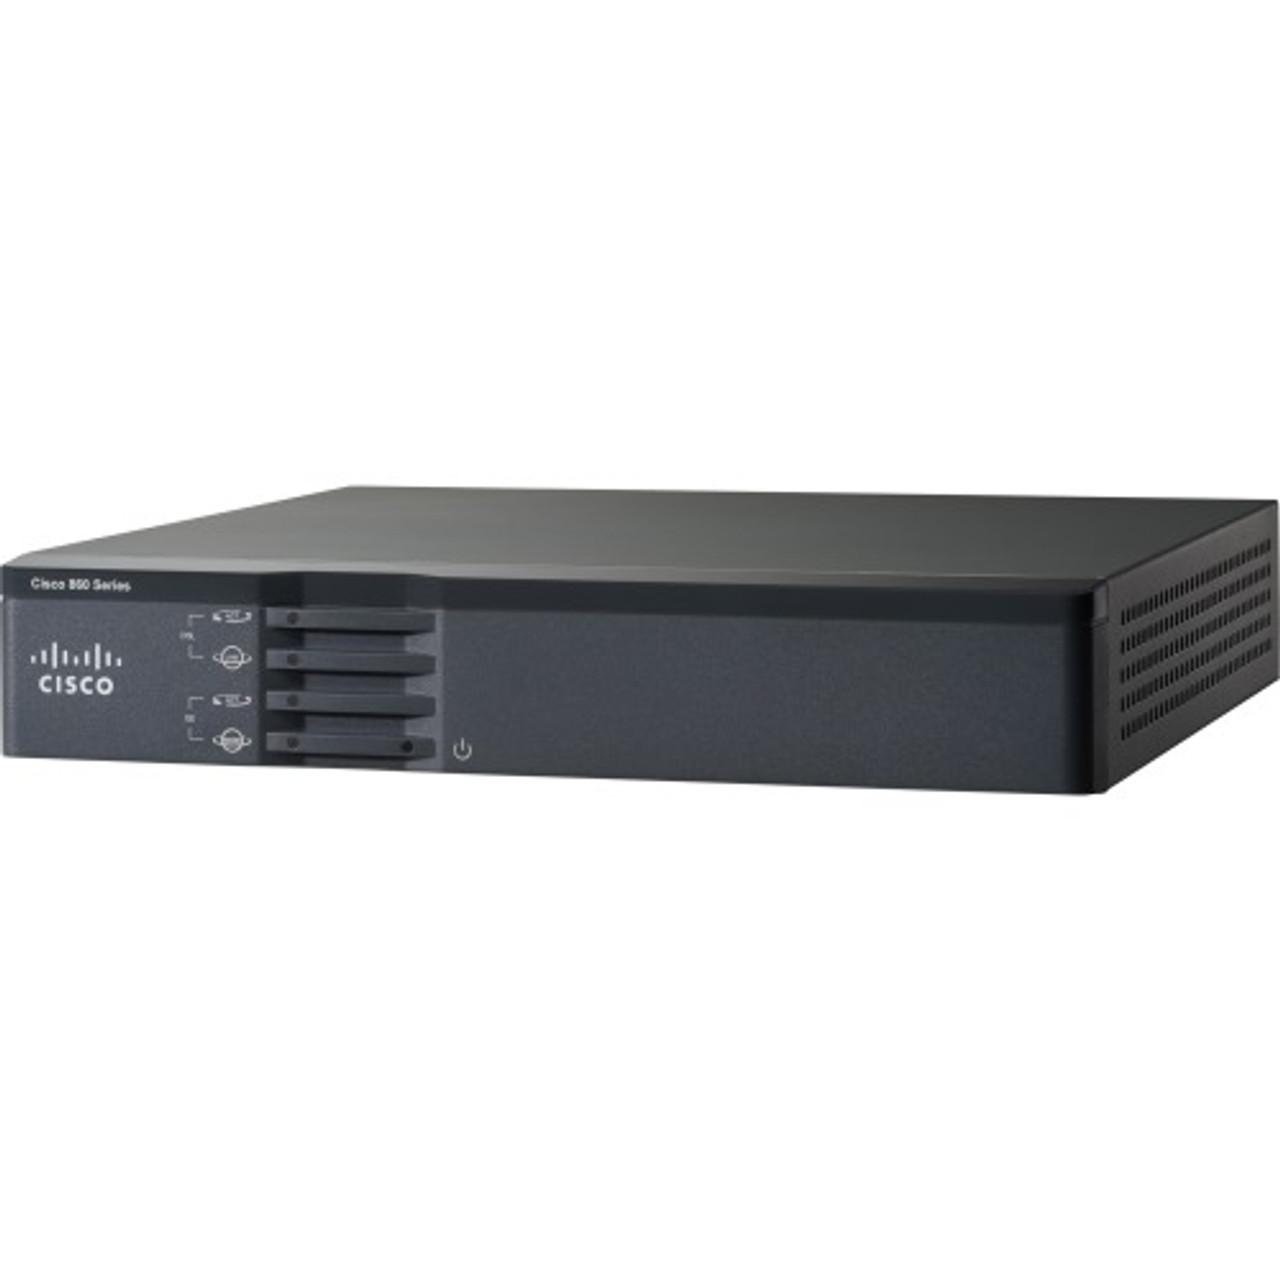 C867VAE Cisco 867VAE Base Router with VDSL2/ADSL2+ over Basic Telephone Service 5 Ports Management Port SlotsGigabit Ethernet VDSL2/ADSL2+ 1U Rack-mountable